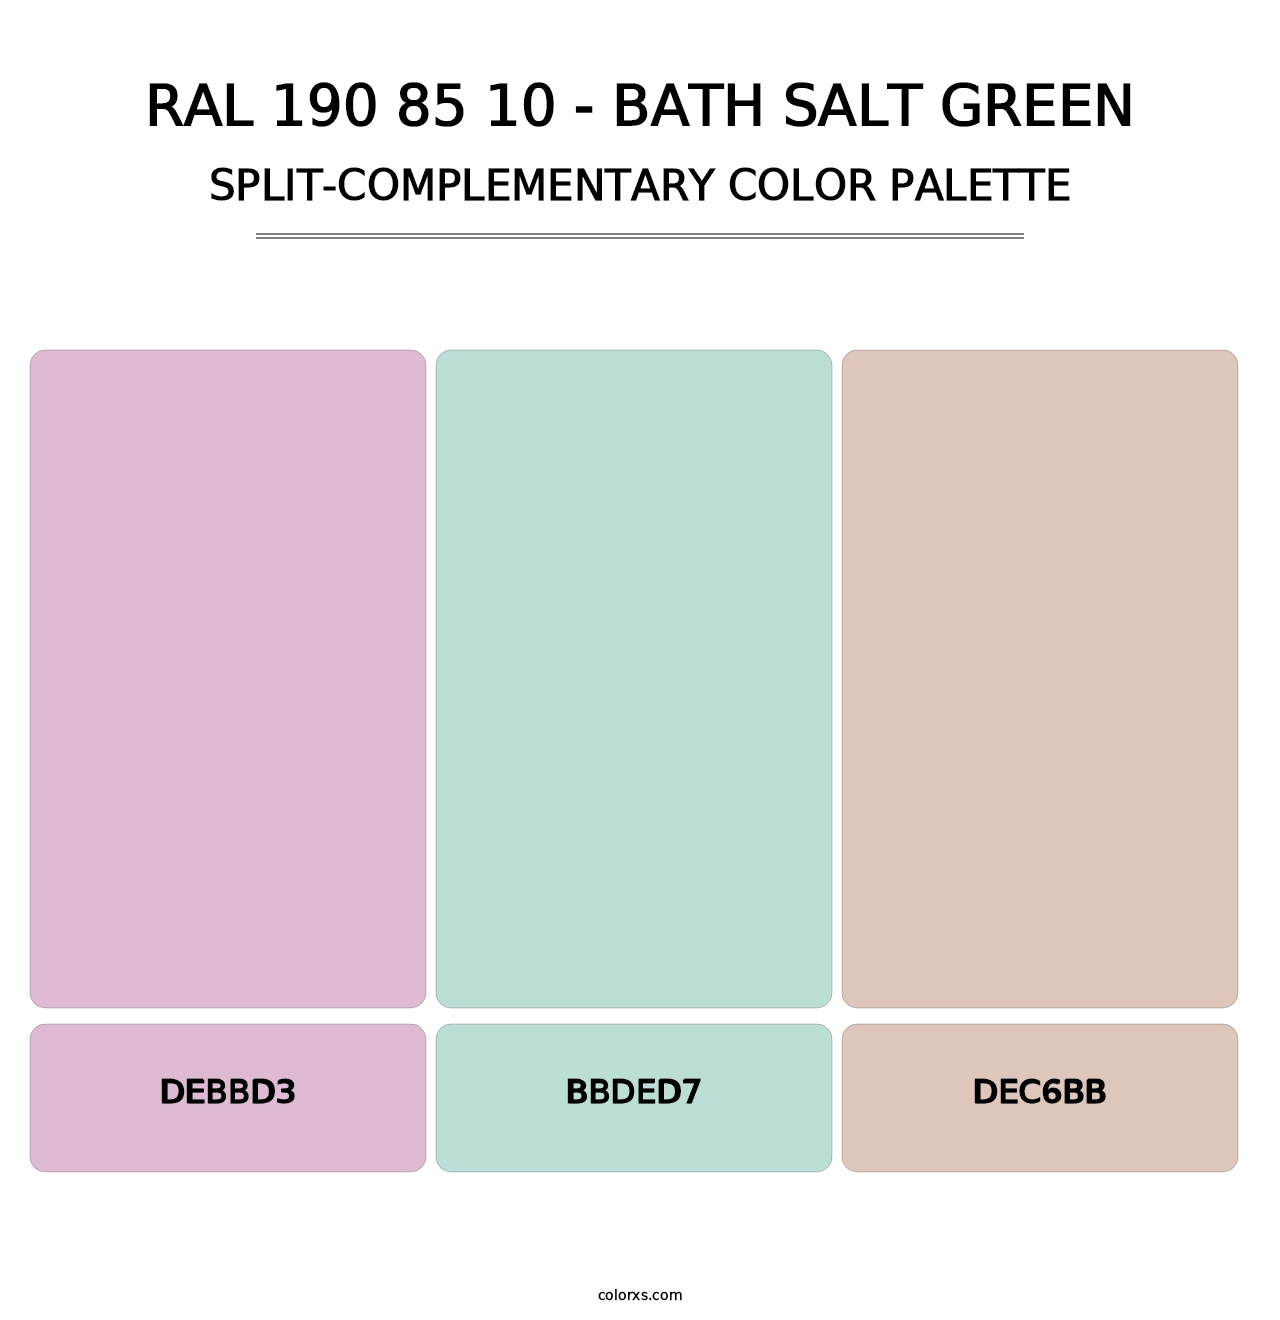 RAL 190 85 10 - Bath Salt Green - Split-Complementary Color Palette